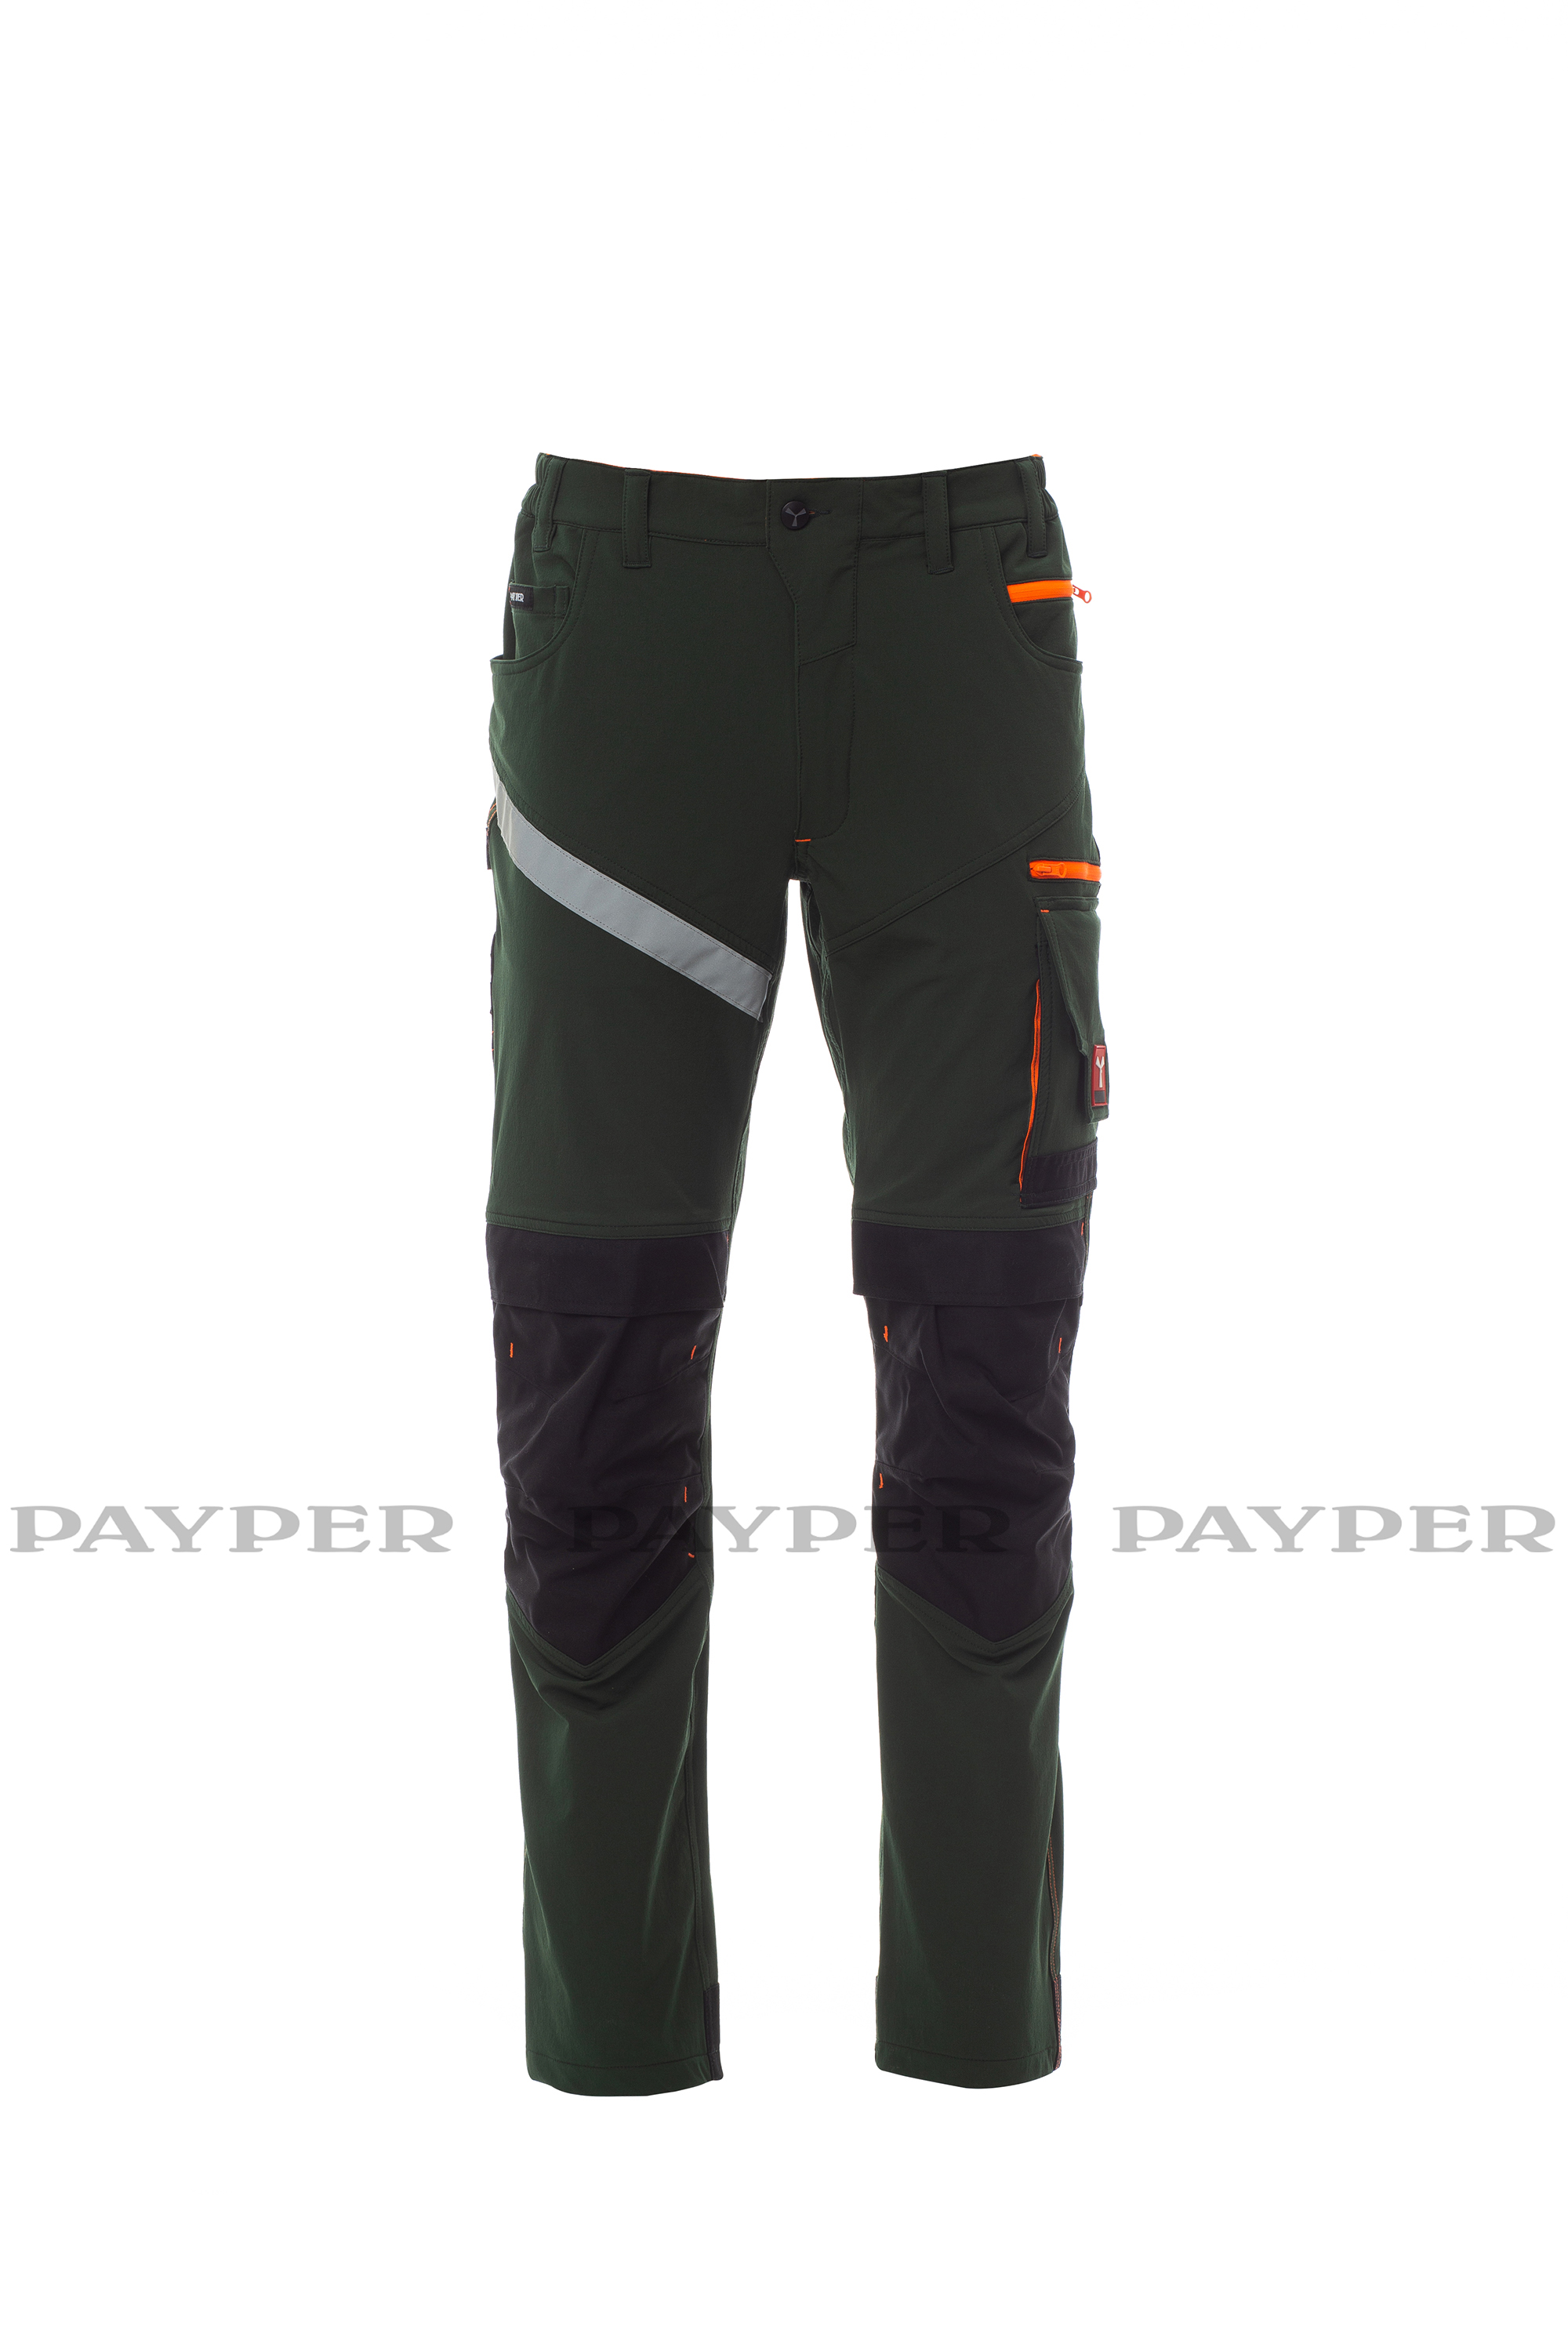 Kalhoty NEXT 4W Payper zelené Velikost: 50